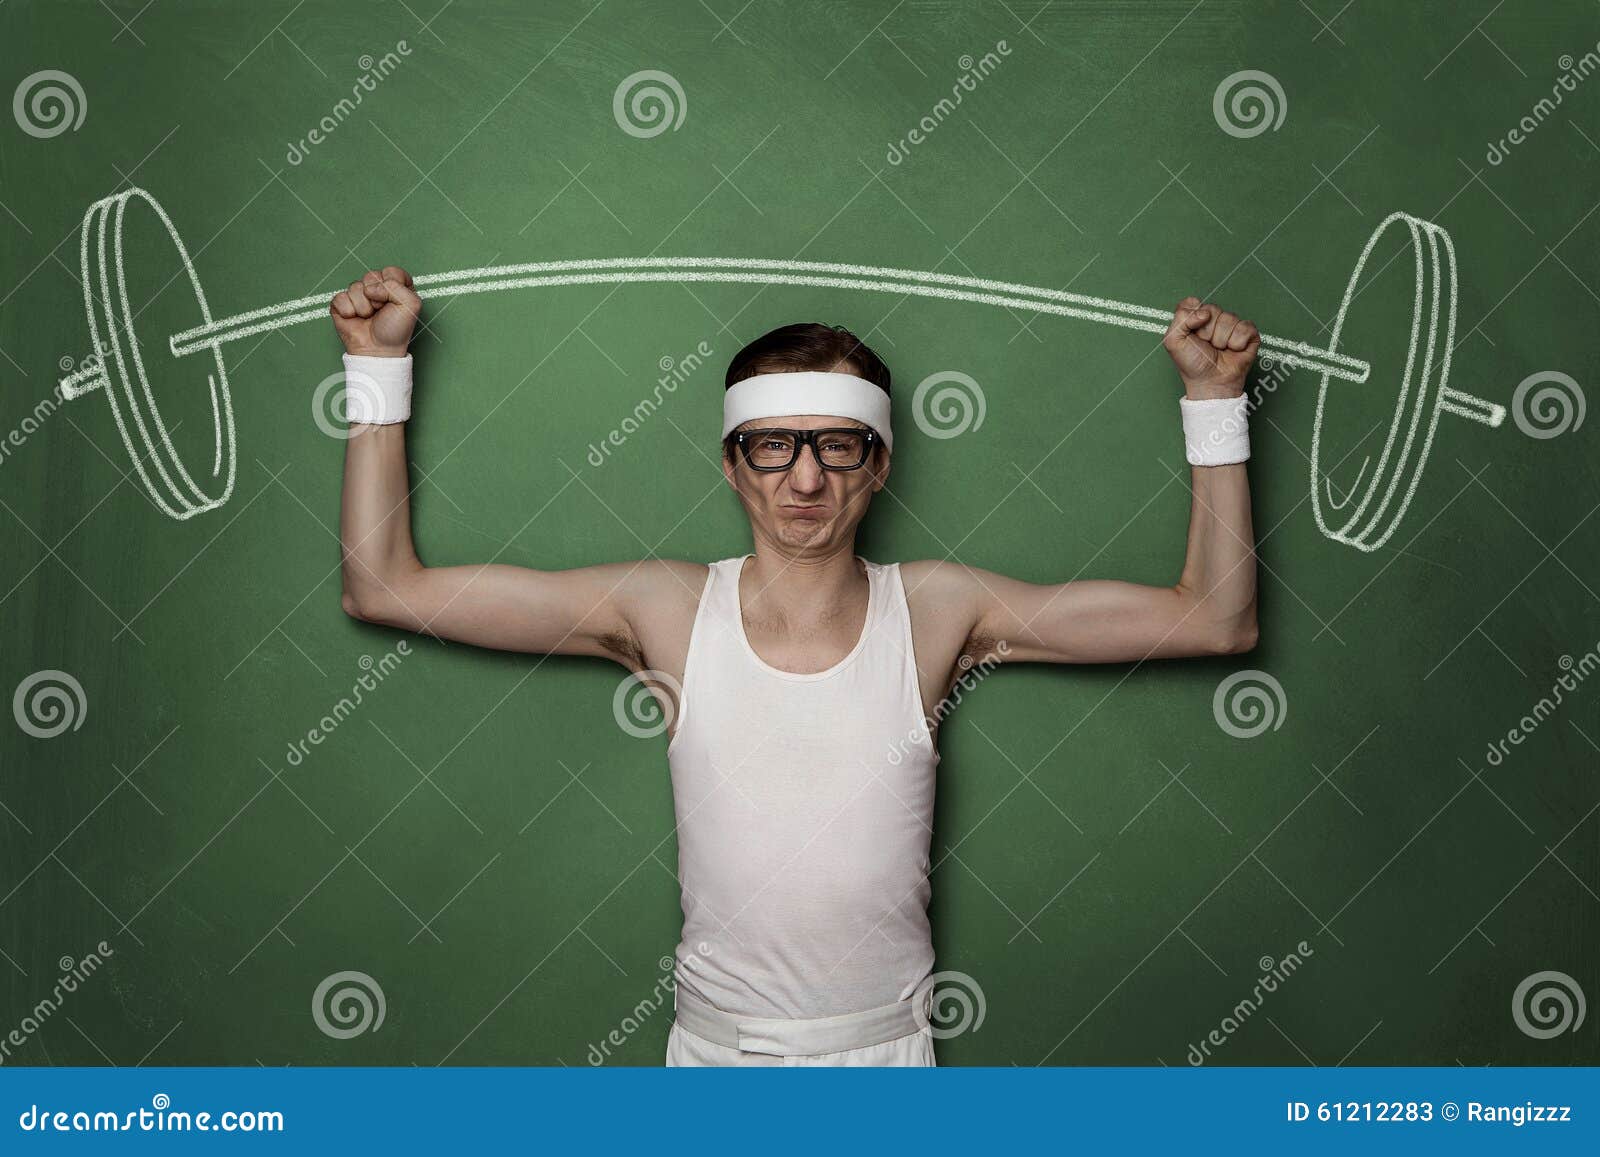 funny-retro-sport-nerd-lifting-weights-drawn-chalkboard-61212283.jpg